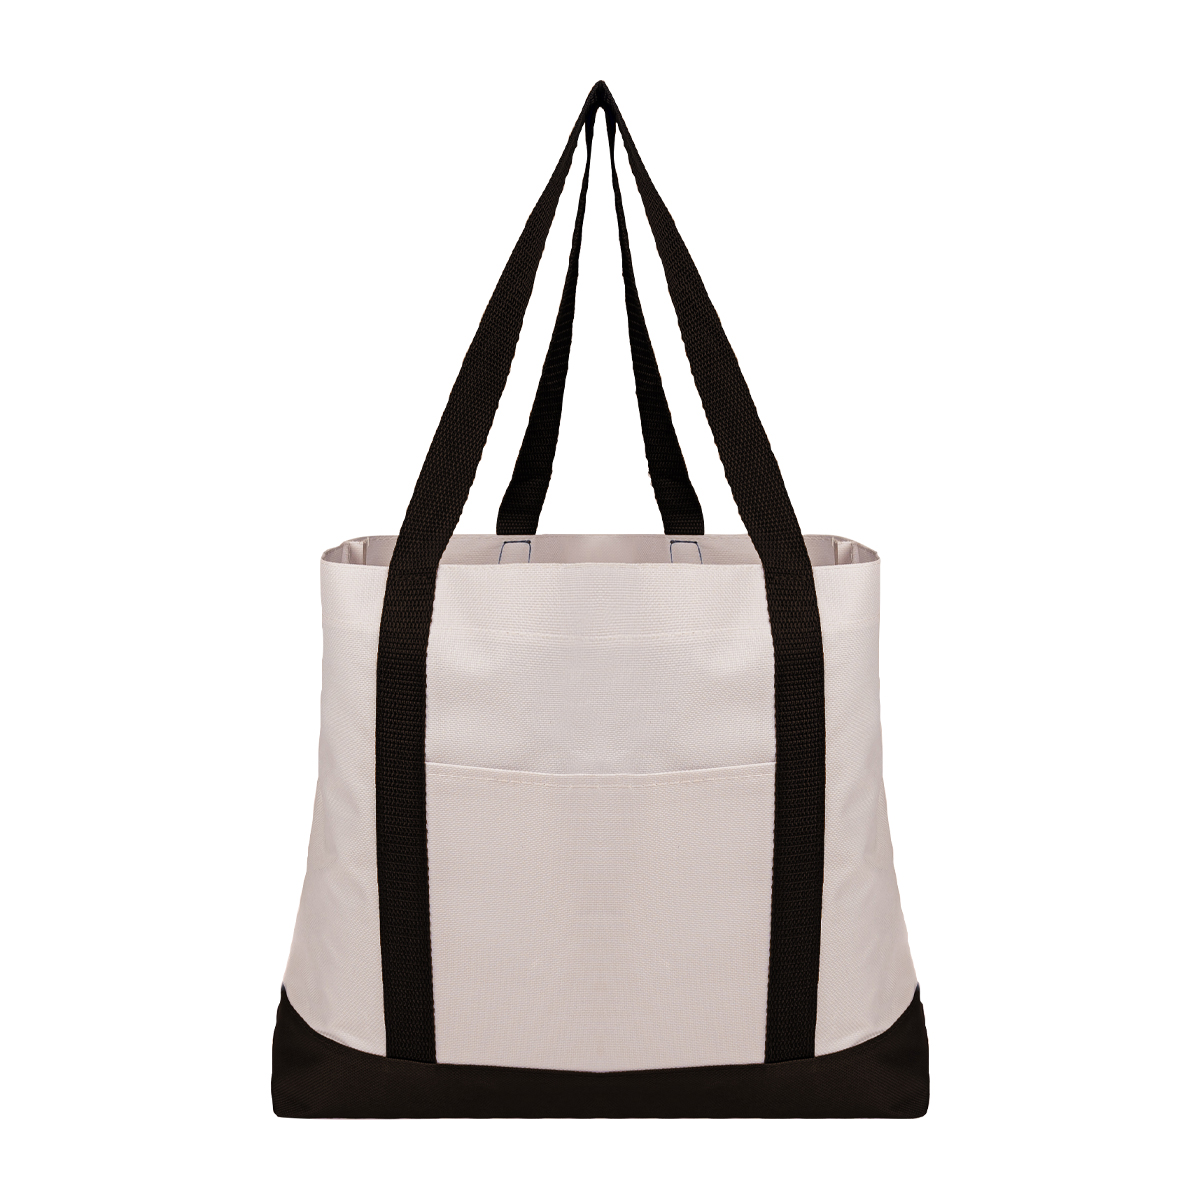 Acadia Tote Bag Product Image